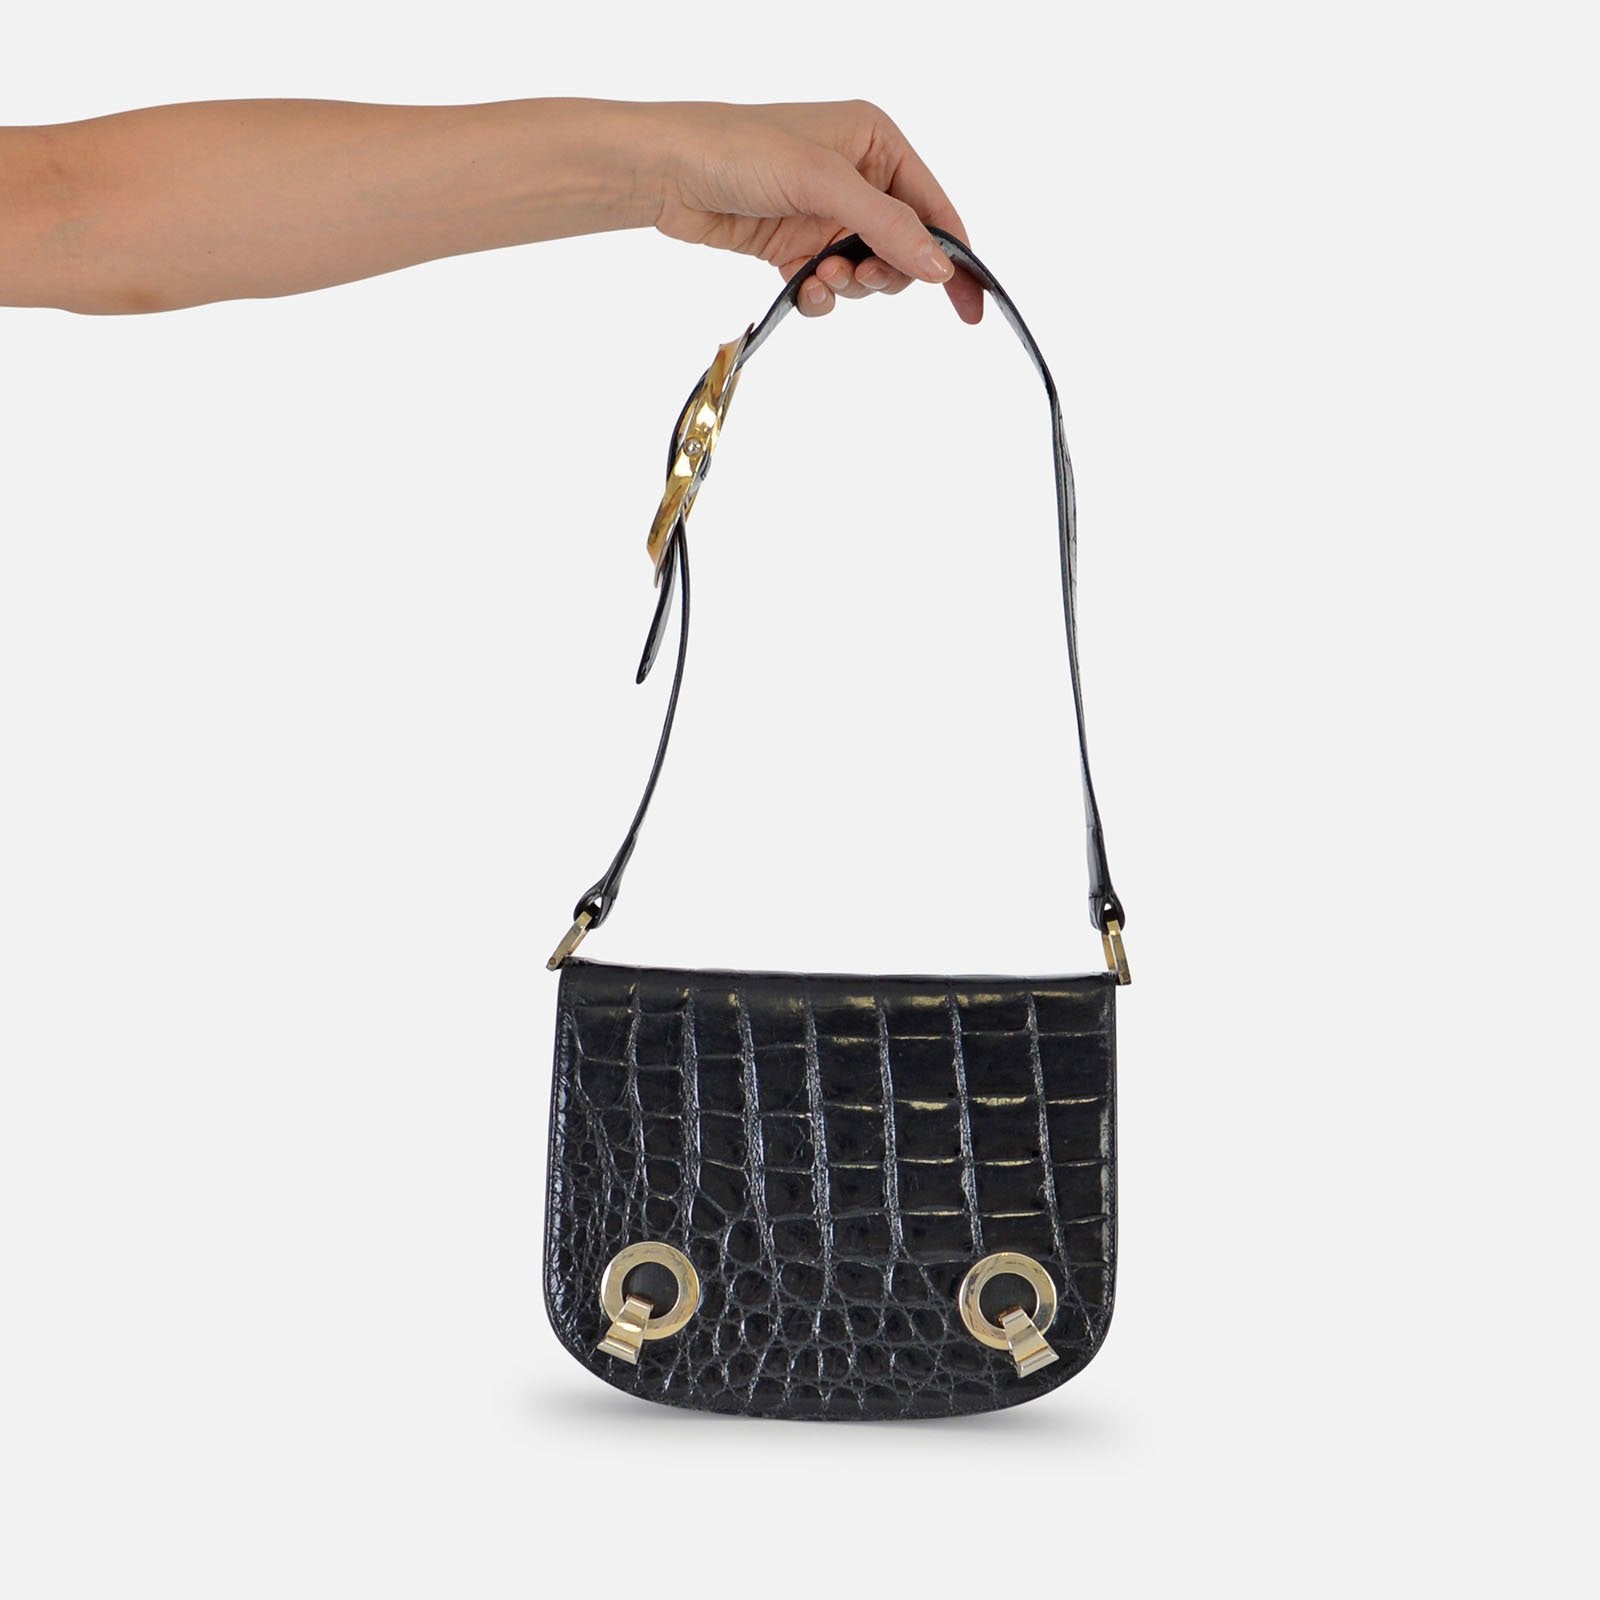 Designer, luxury, and vintage handbags for modern, stylish women